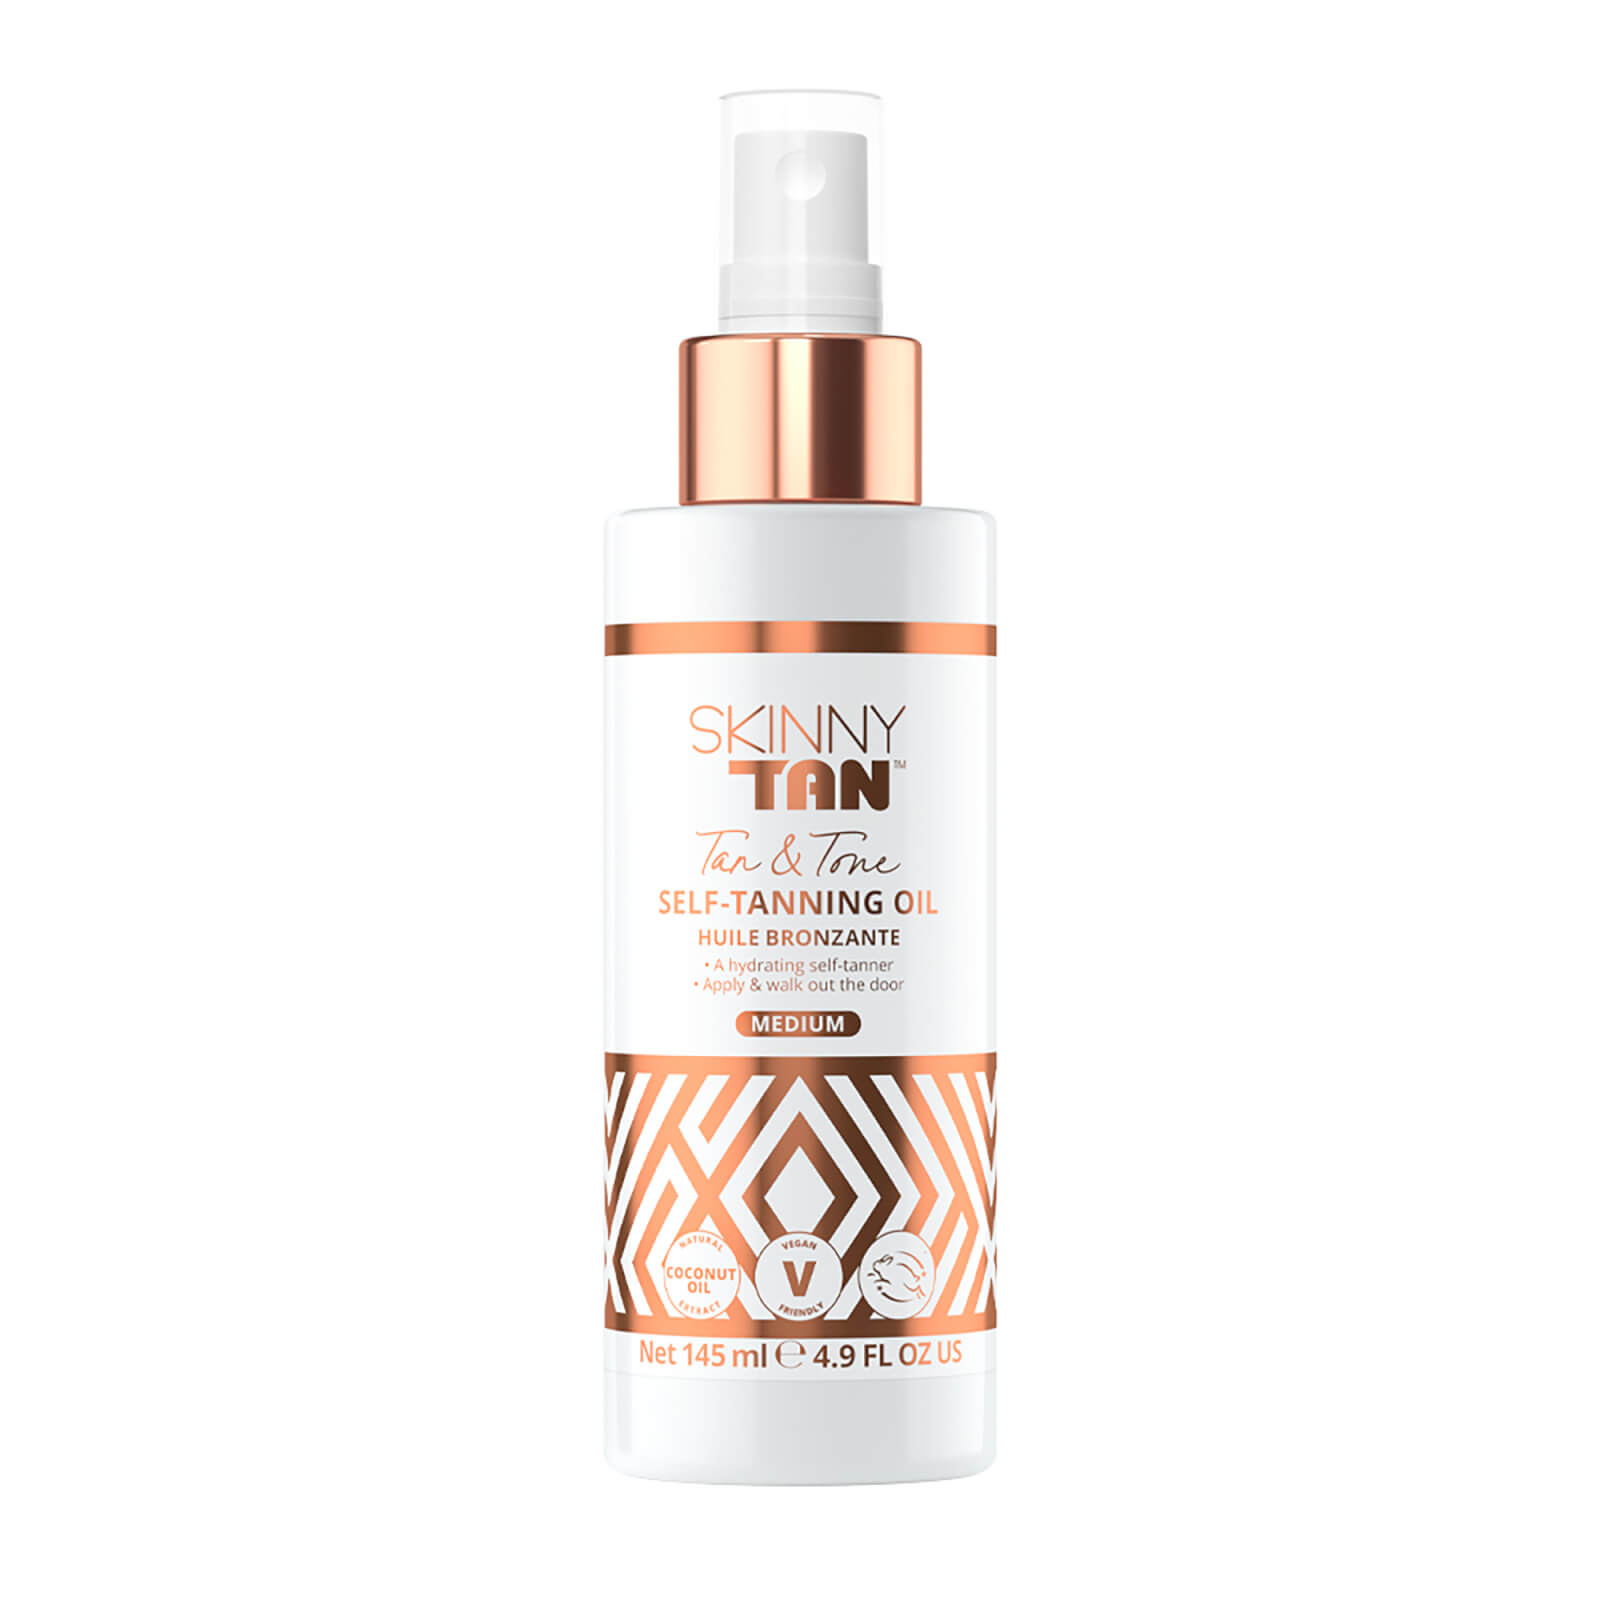 Skinny Tan Tan & Tone Self Tanning Oil Medium 145ml